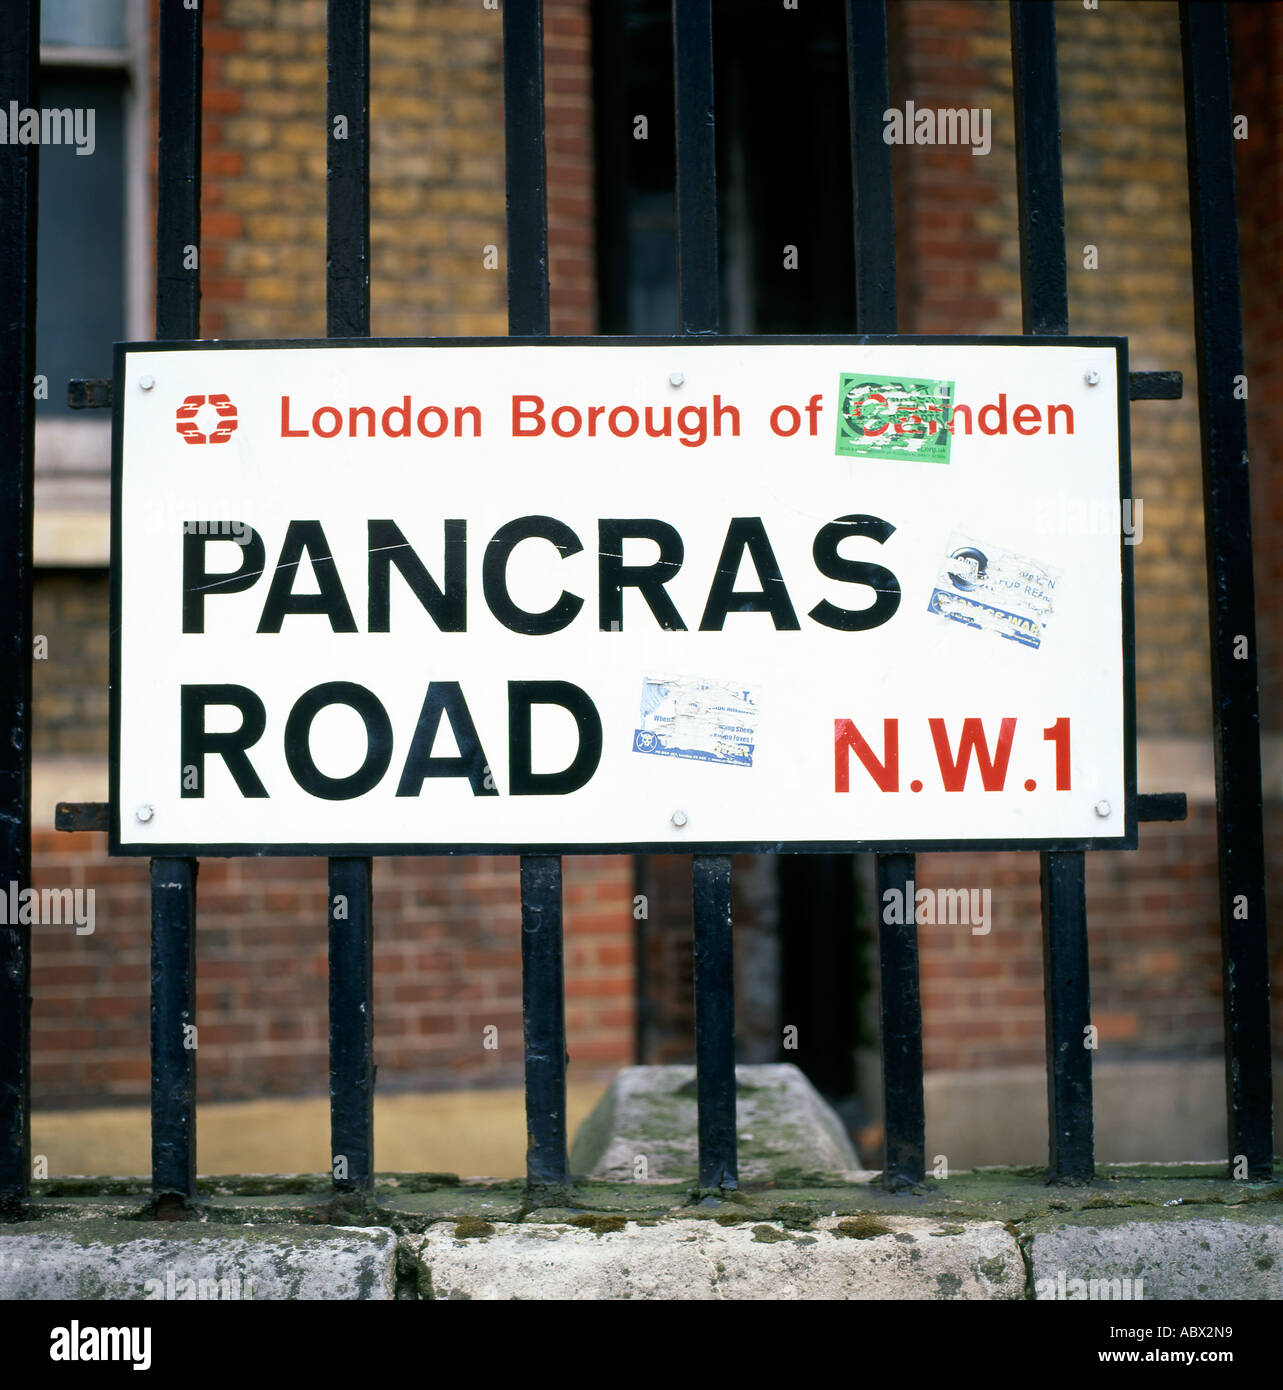 Pancras Road street sign London Borough of Camden UK Stock Photo